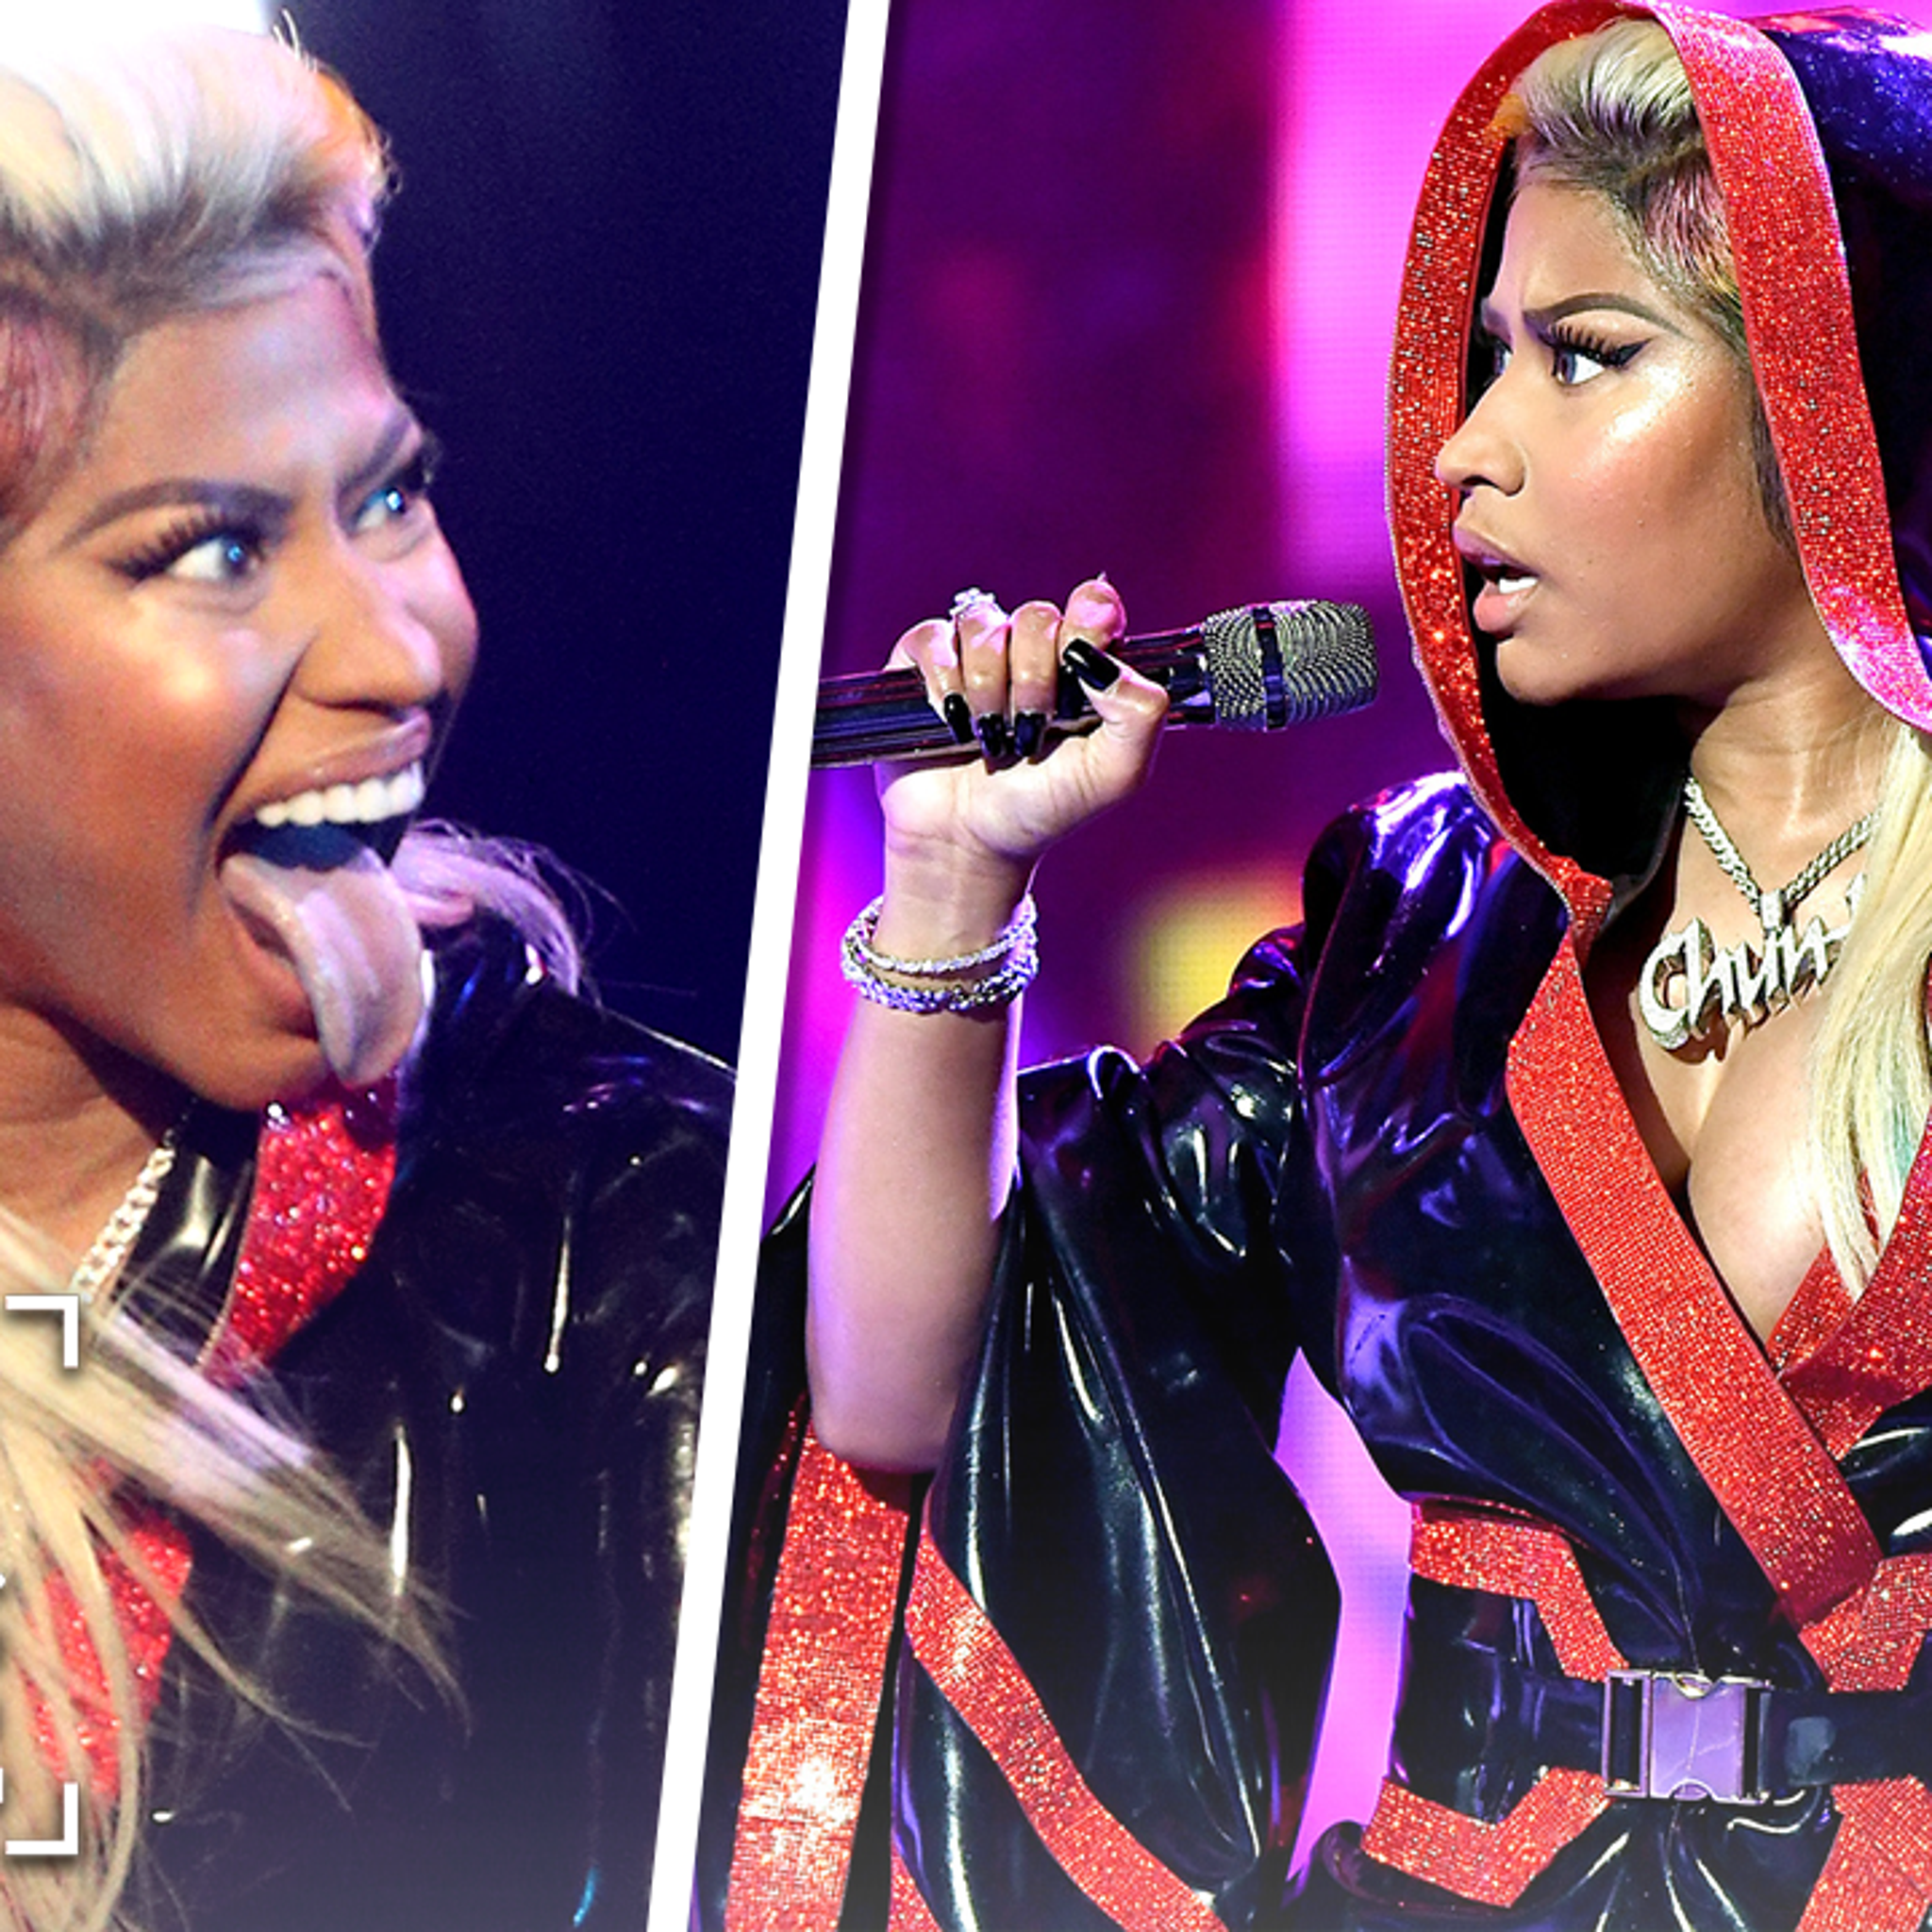 Listen to “Fendi,” Nicki Minaj's first new song post-retirement